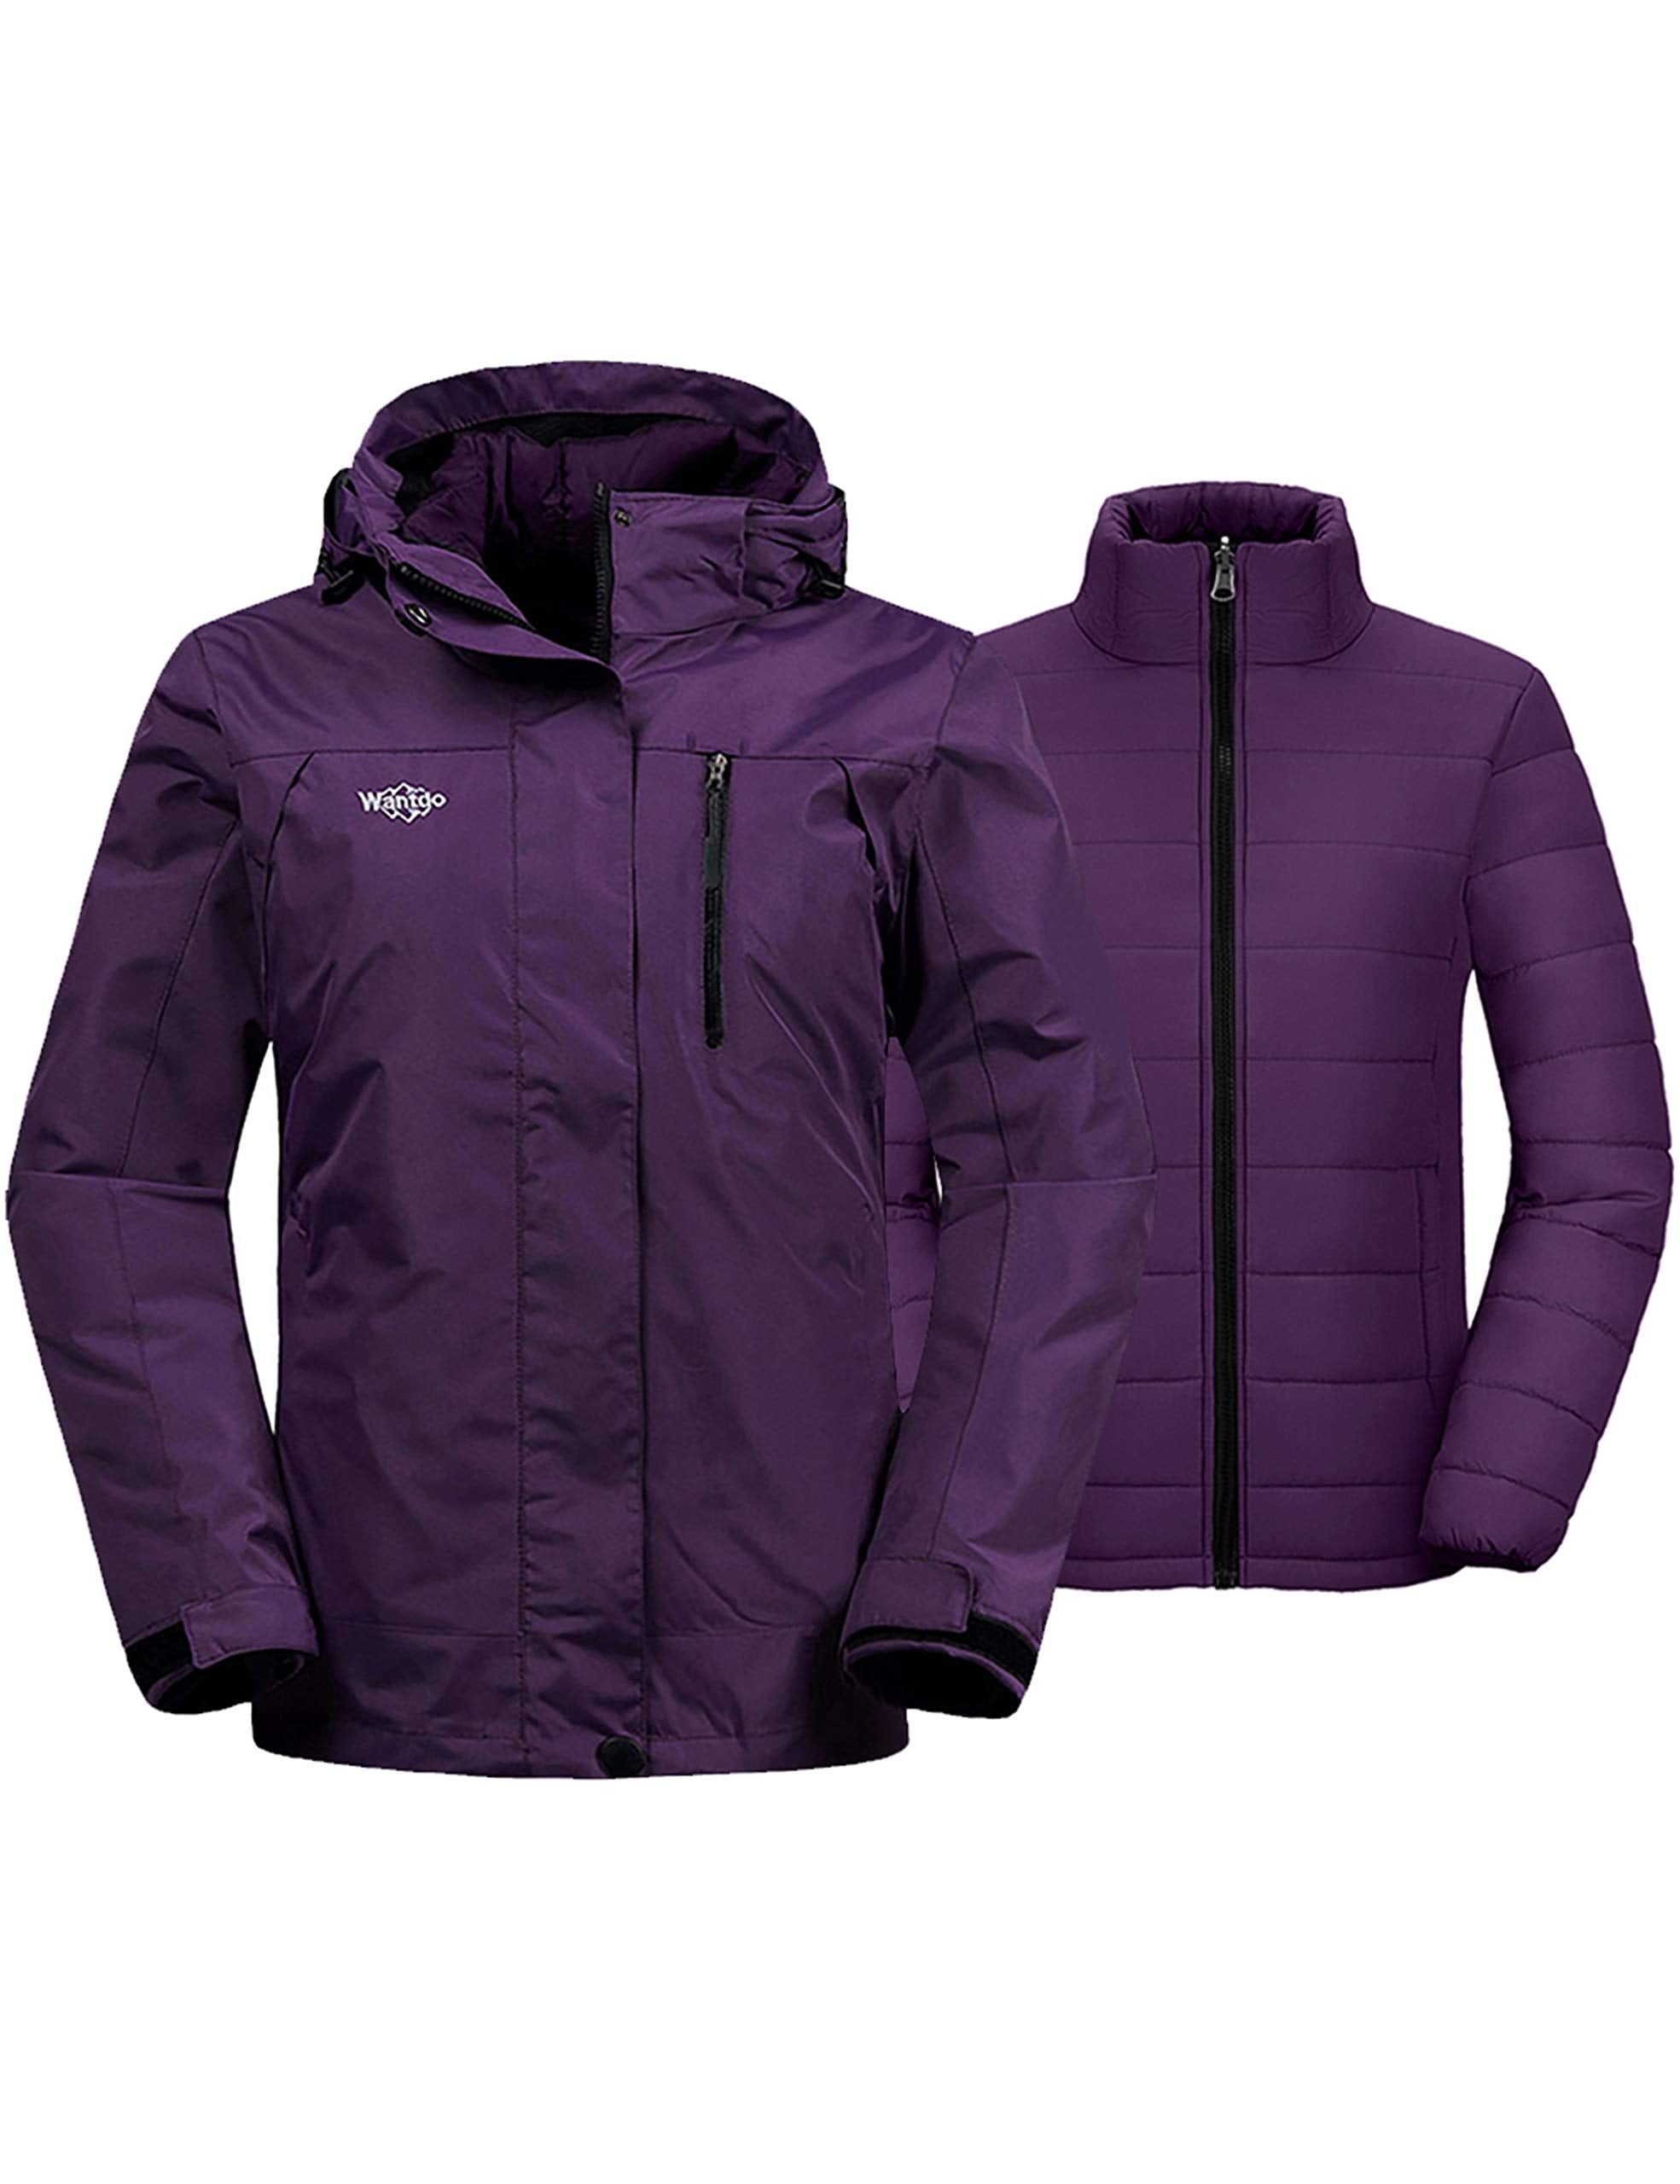 Wantdo Mens Warm Winter Coat Fleece Jacket Ski Jacket Waterproof Mountain Snowboarding Coat Outdoor Windbreaker